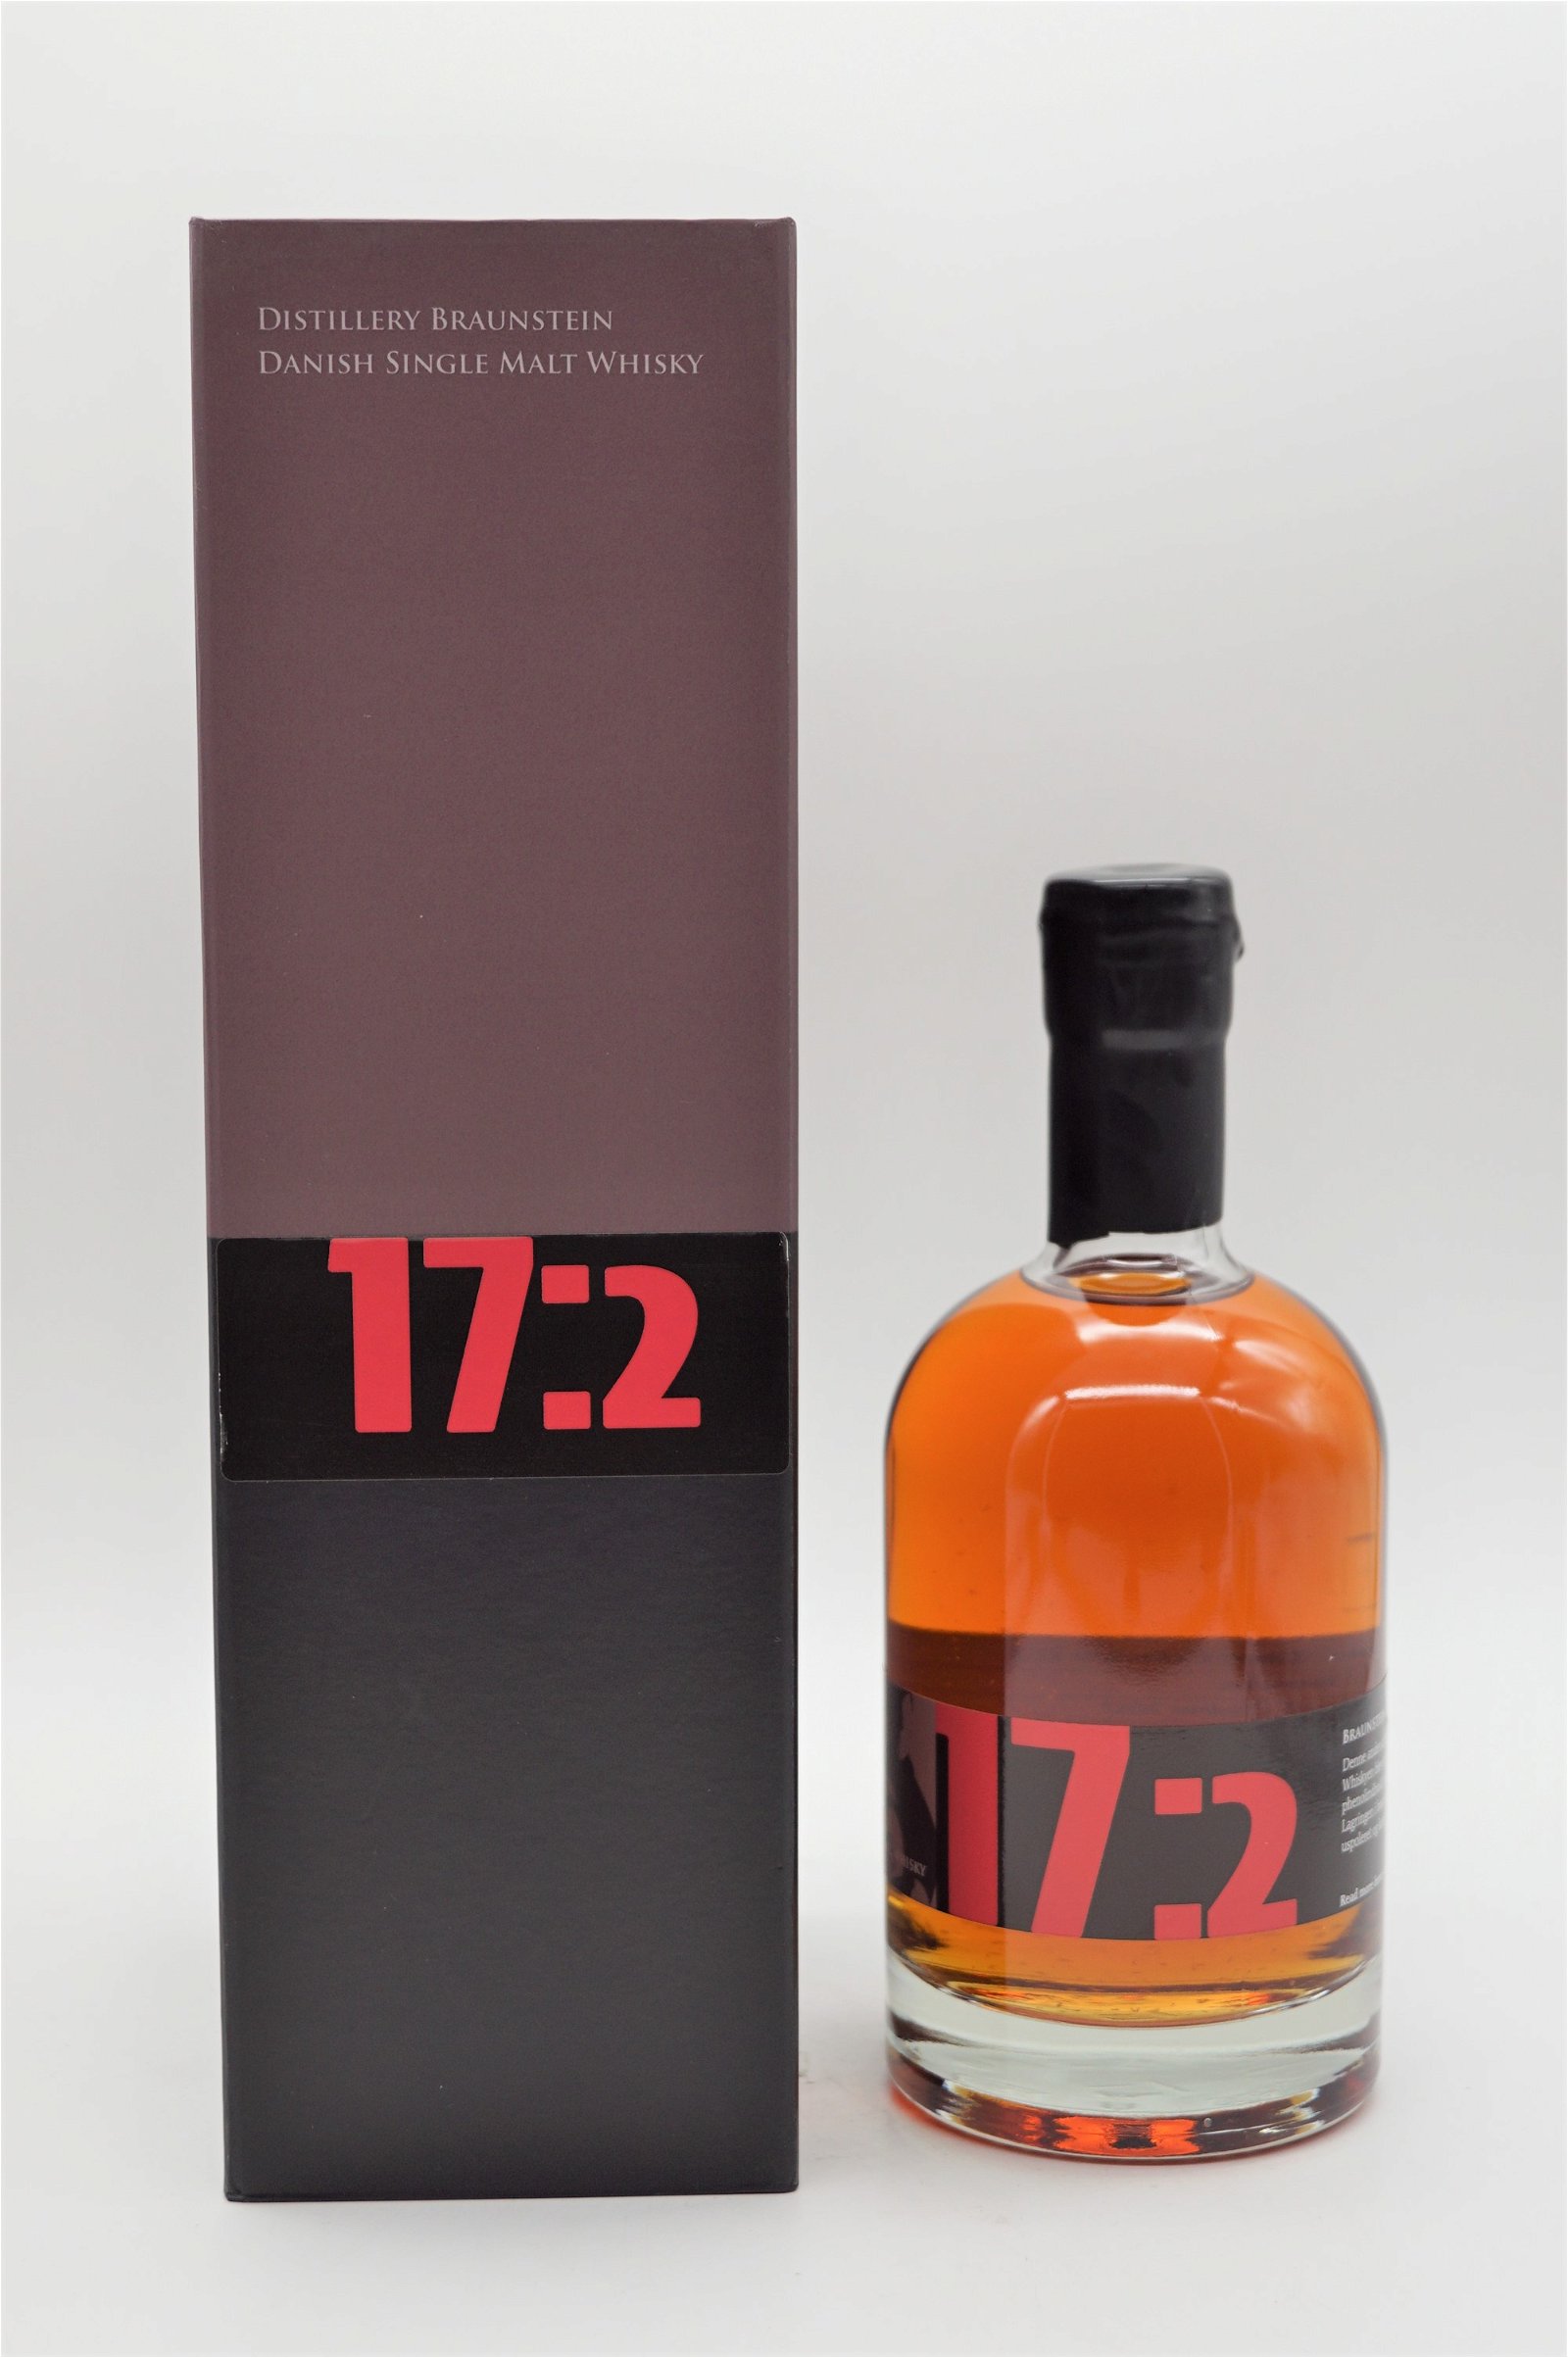 Braunstein Libary Collection 17:2 Dansk Single Malt Whisky